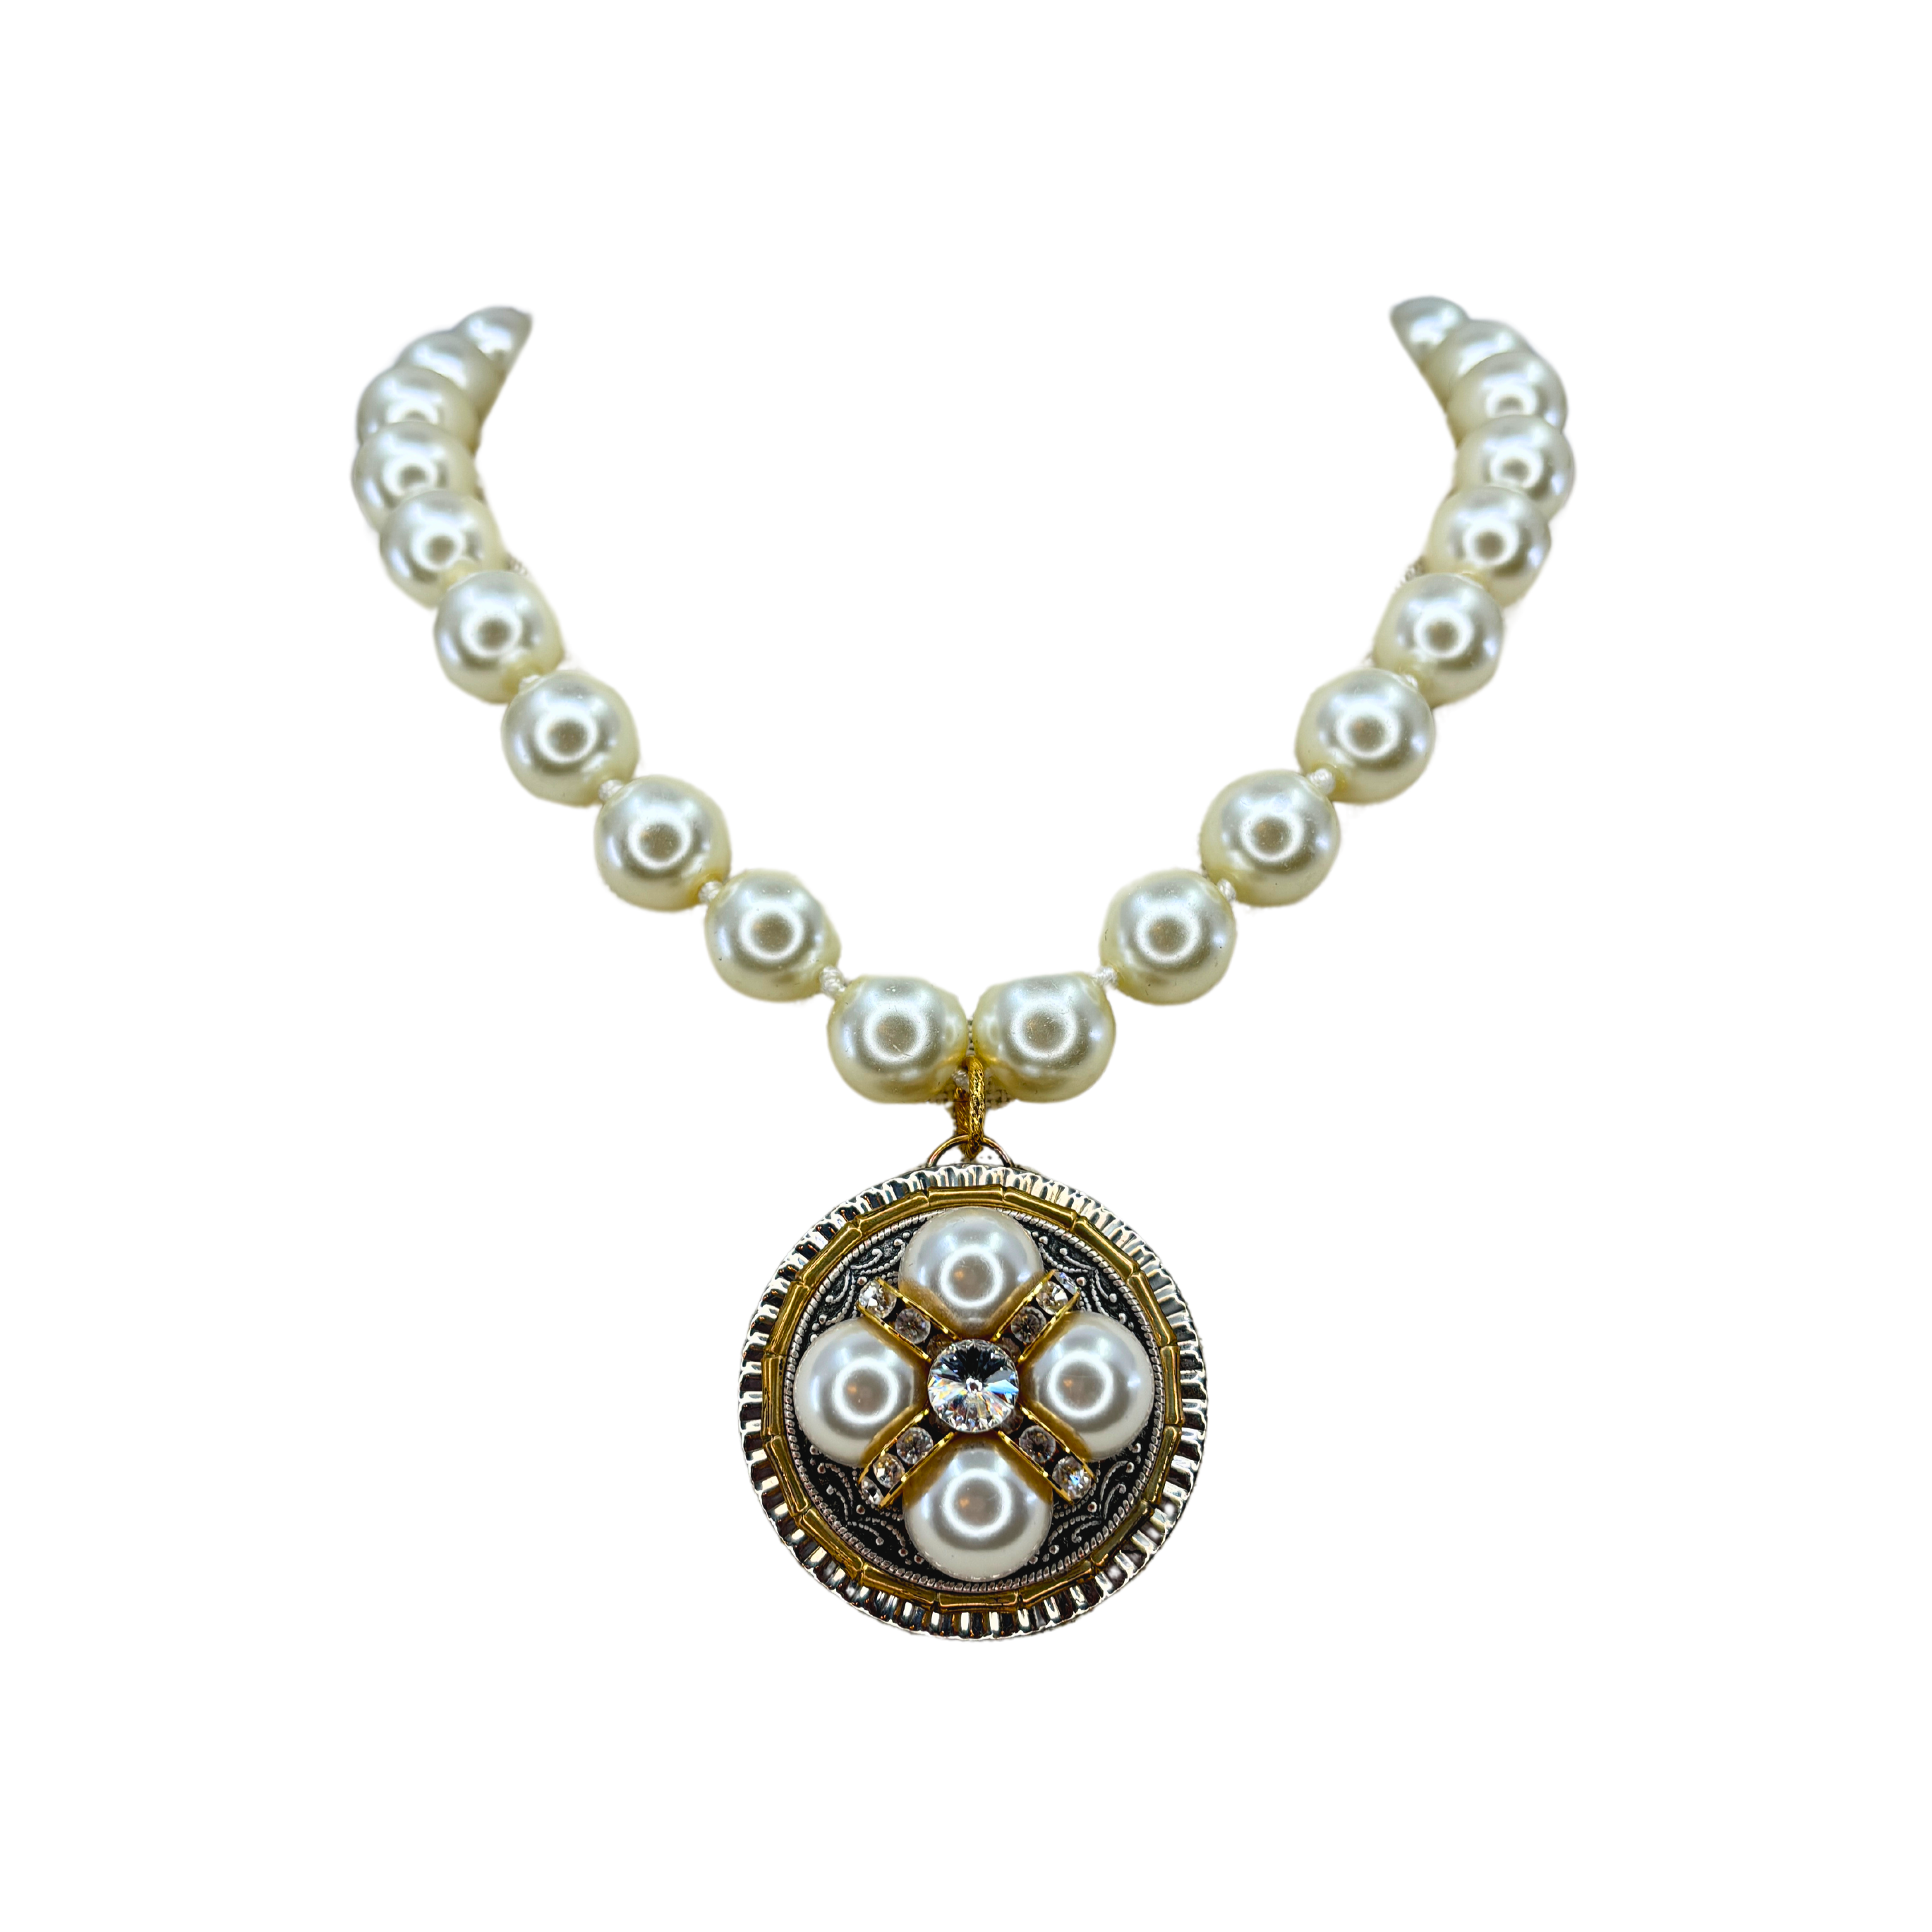 Vintage Repurposed Pearl & Rhinestone Necklace